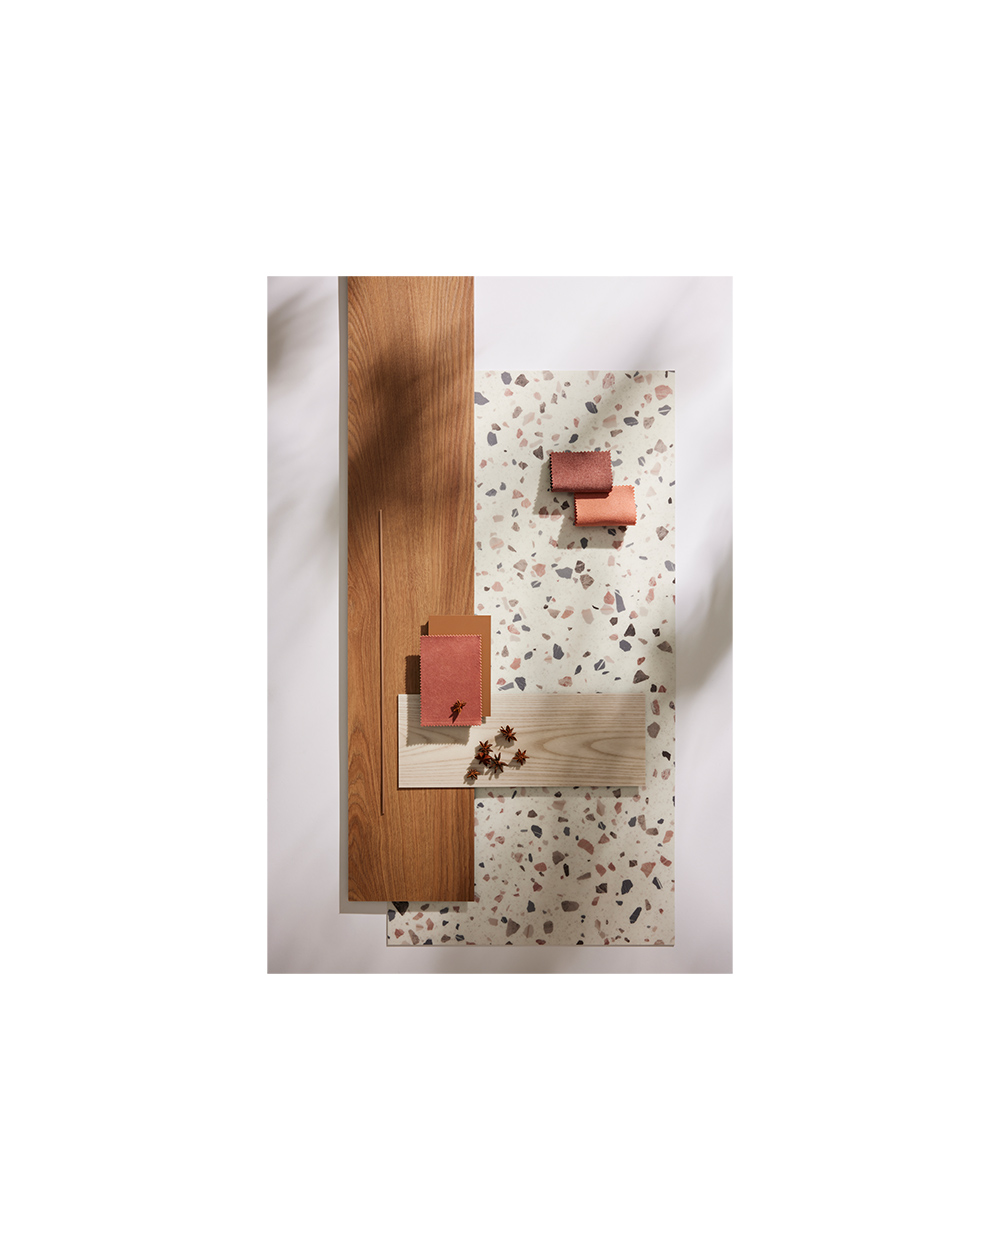 Luxury vinyl flooring - Roots collection - Awaken the forest style - Moodboard